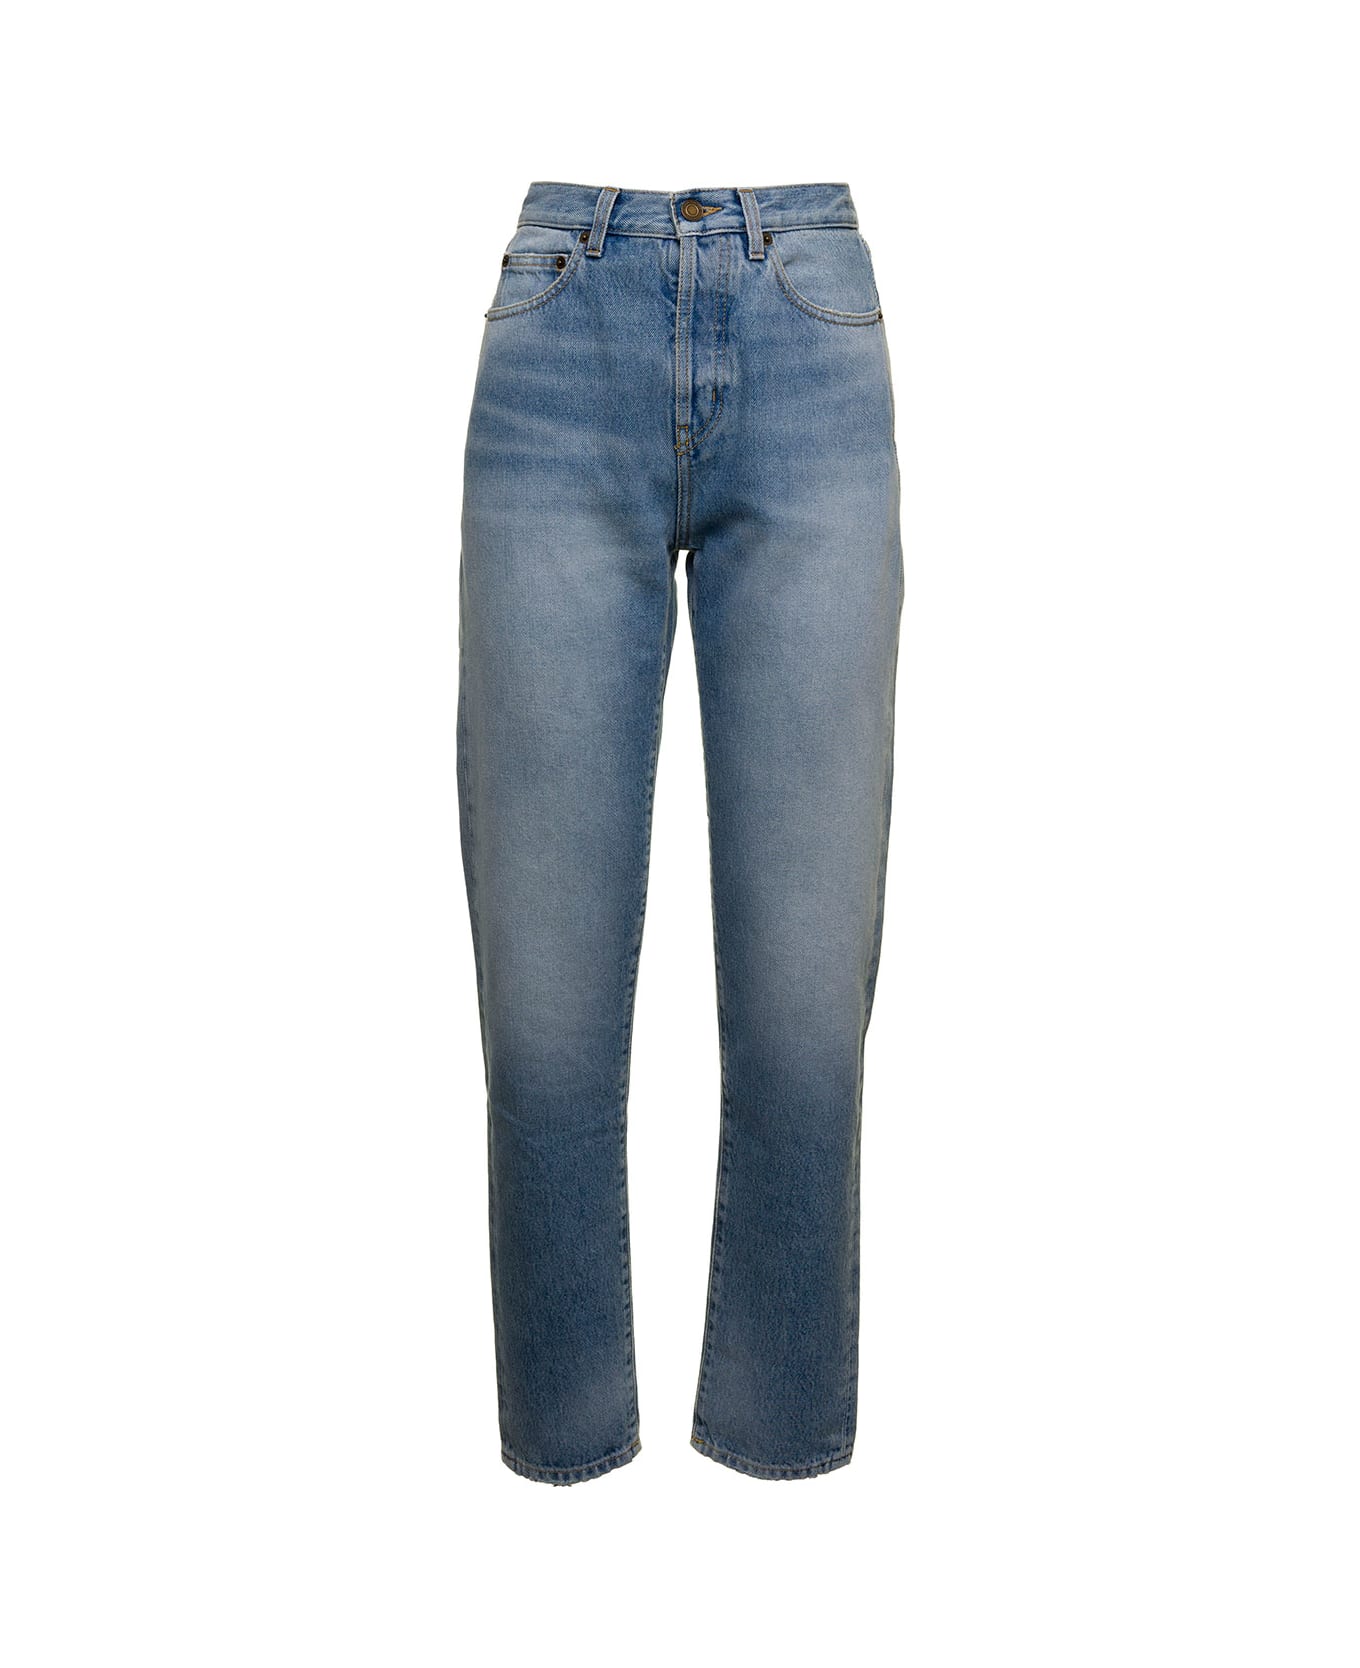 Saint Laurent Woman's High Waist Slim Fit Denim Jeans - Blu デニム